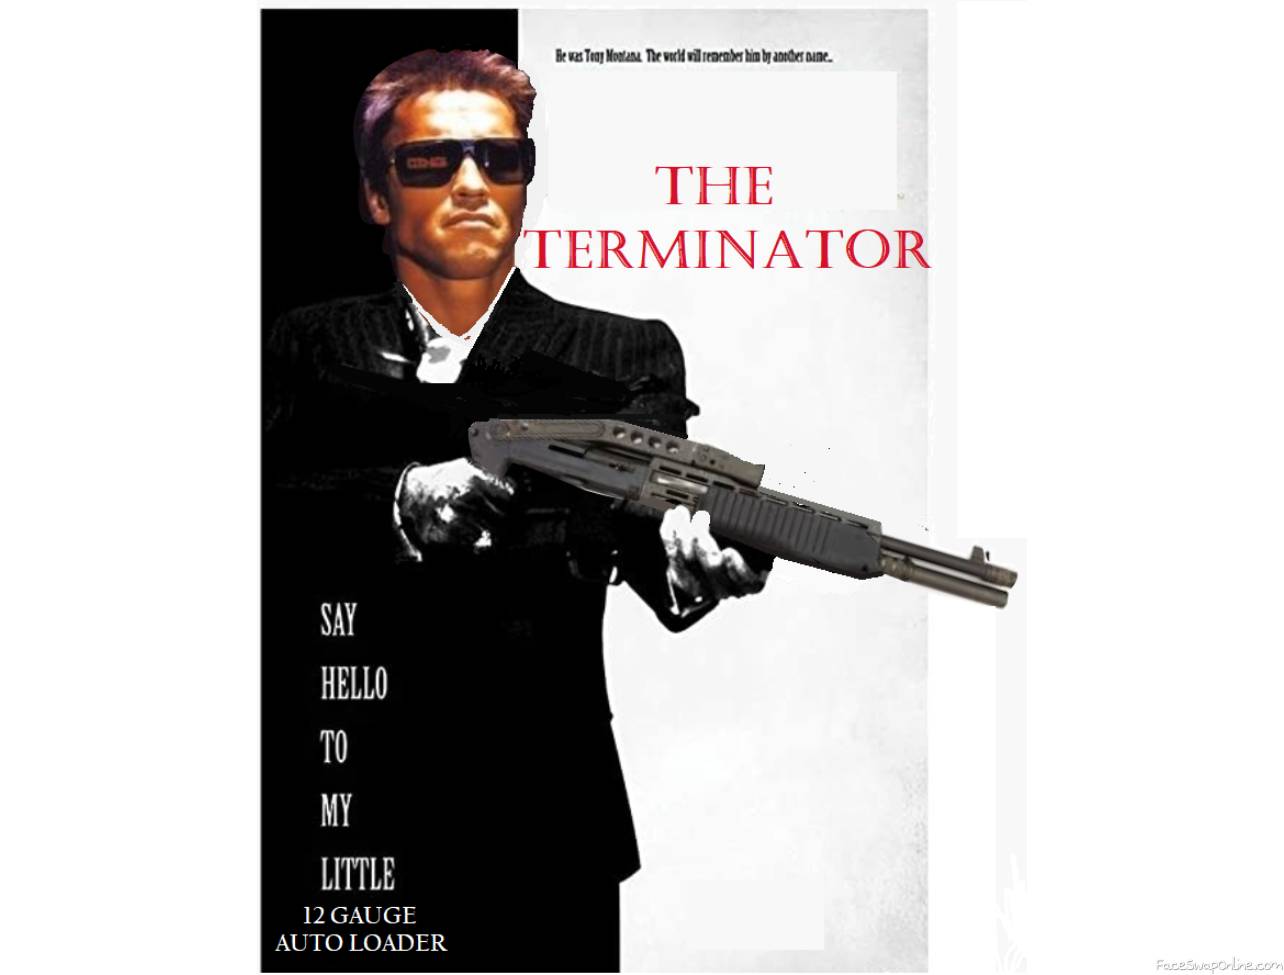 Terminator/Scarface mashup